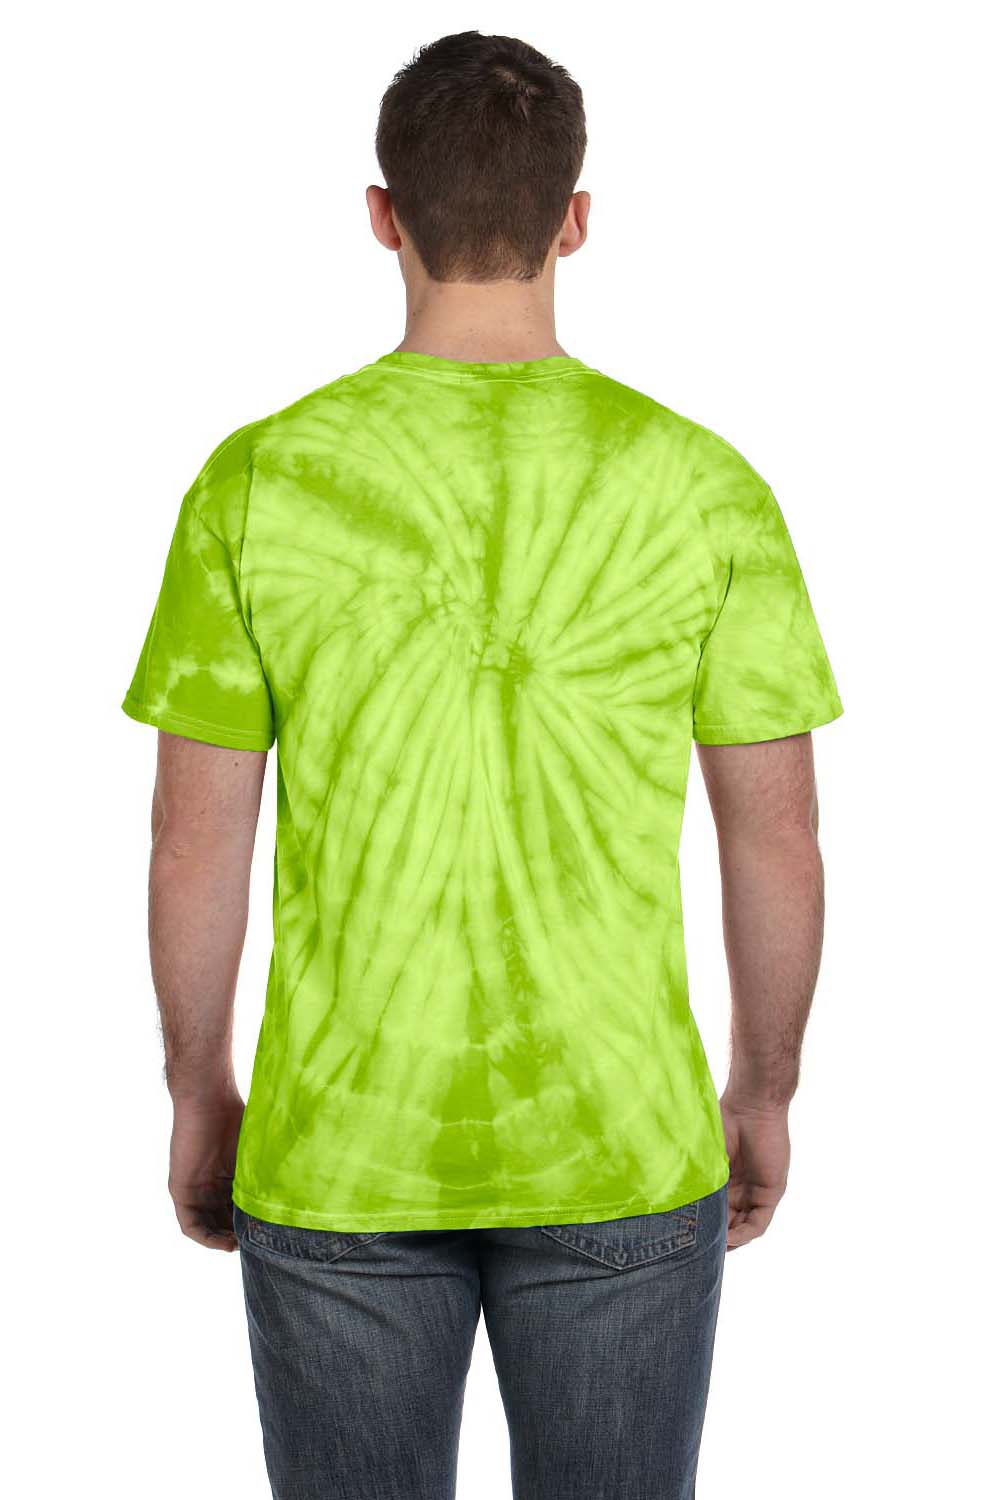 Tie-Dye CD101 Mens Short Sleeve Crewneck T-Shirt Lime Green Back